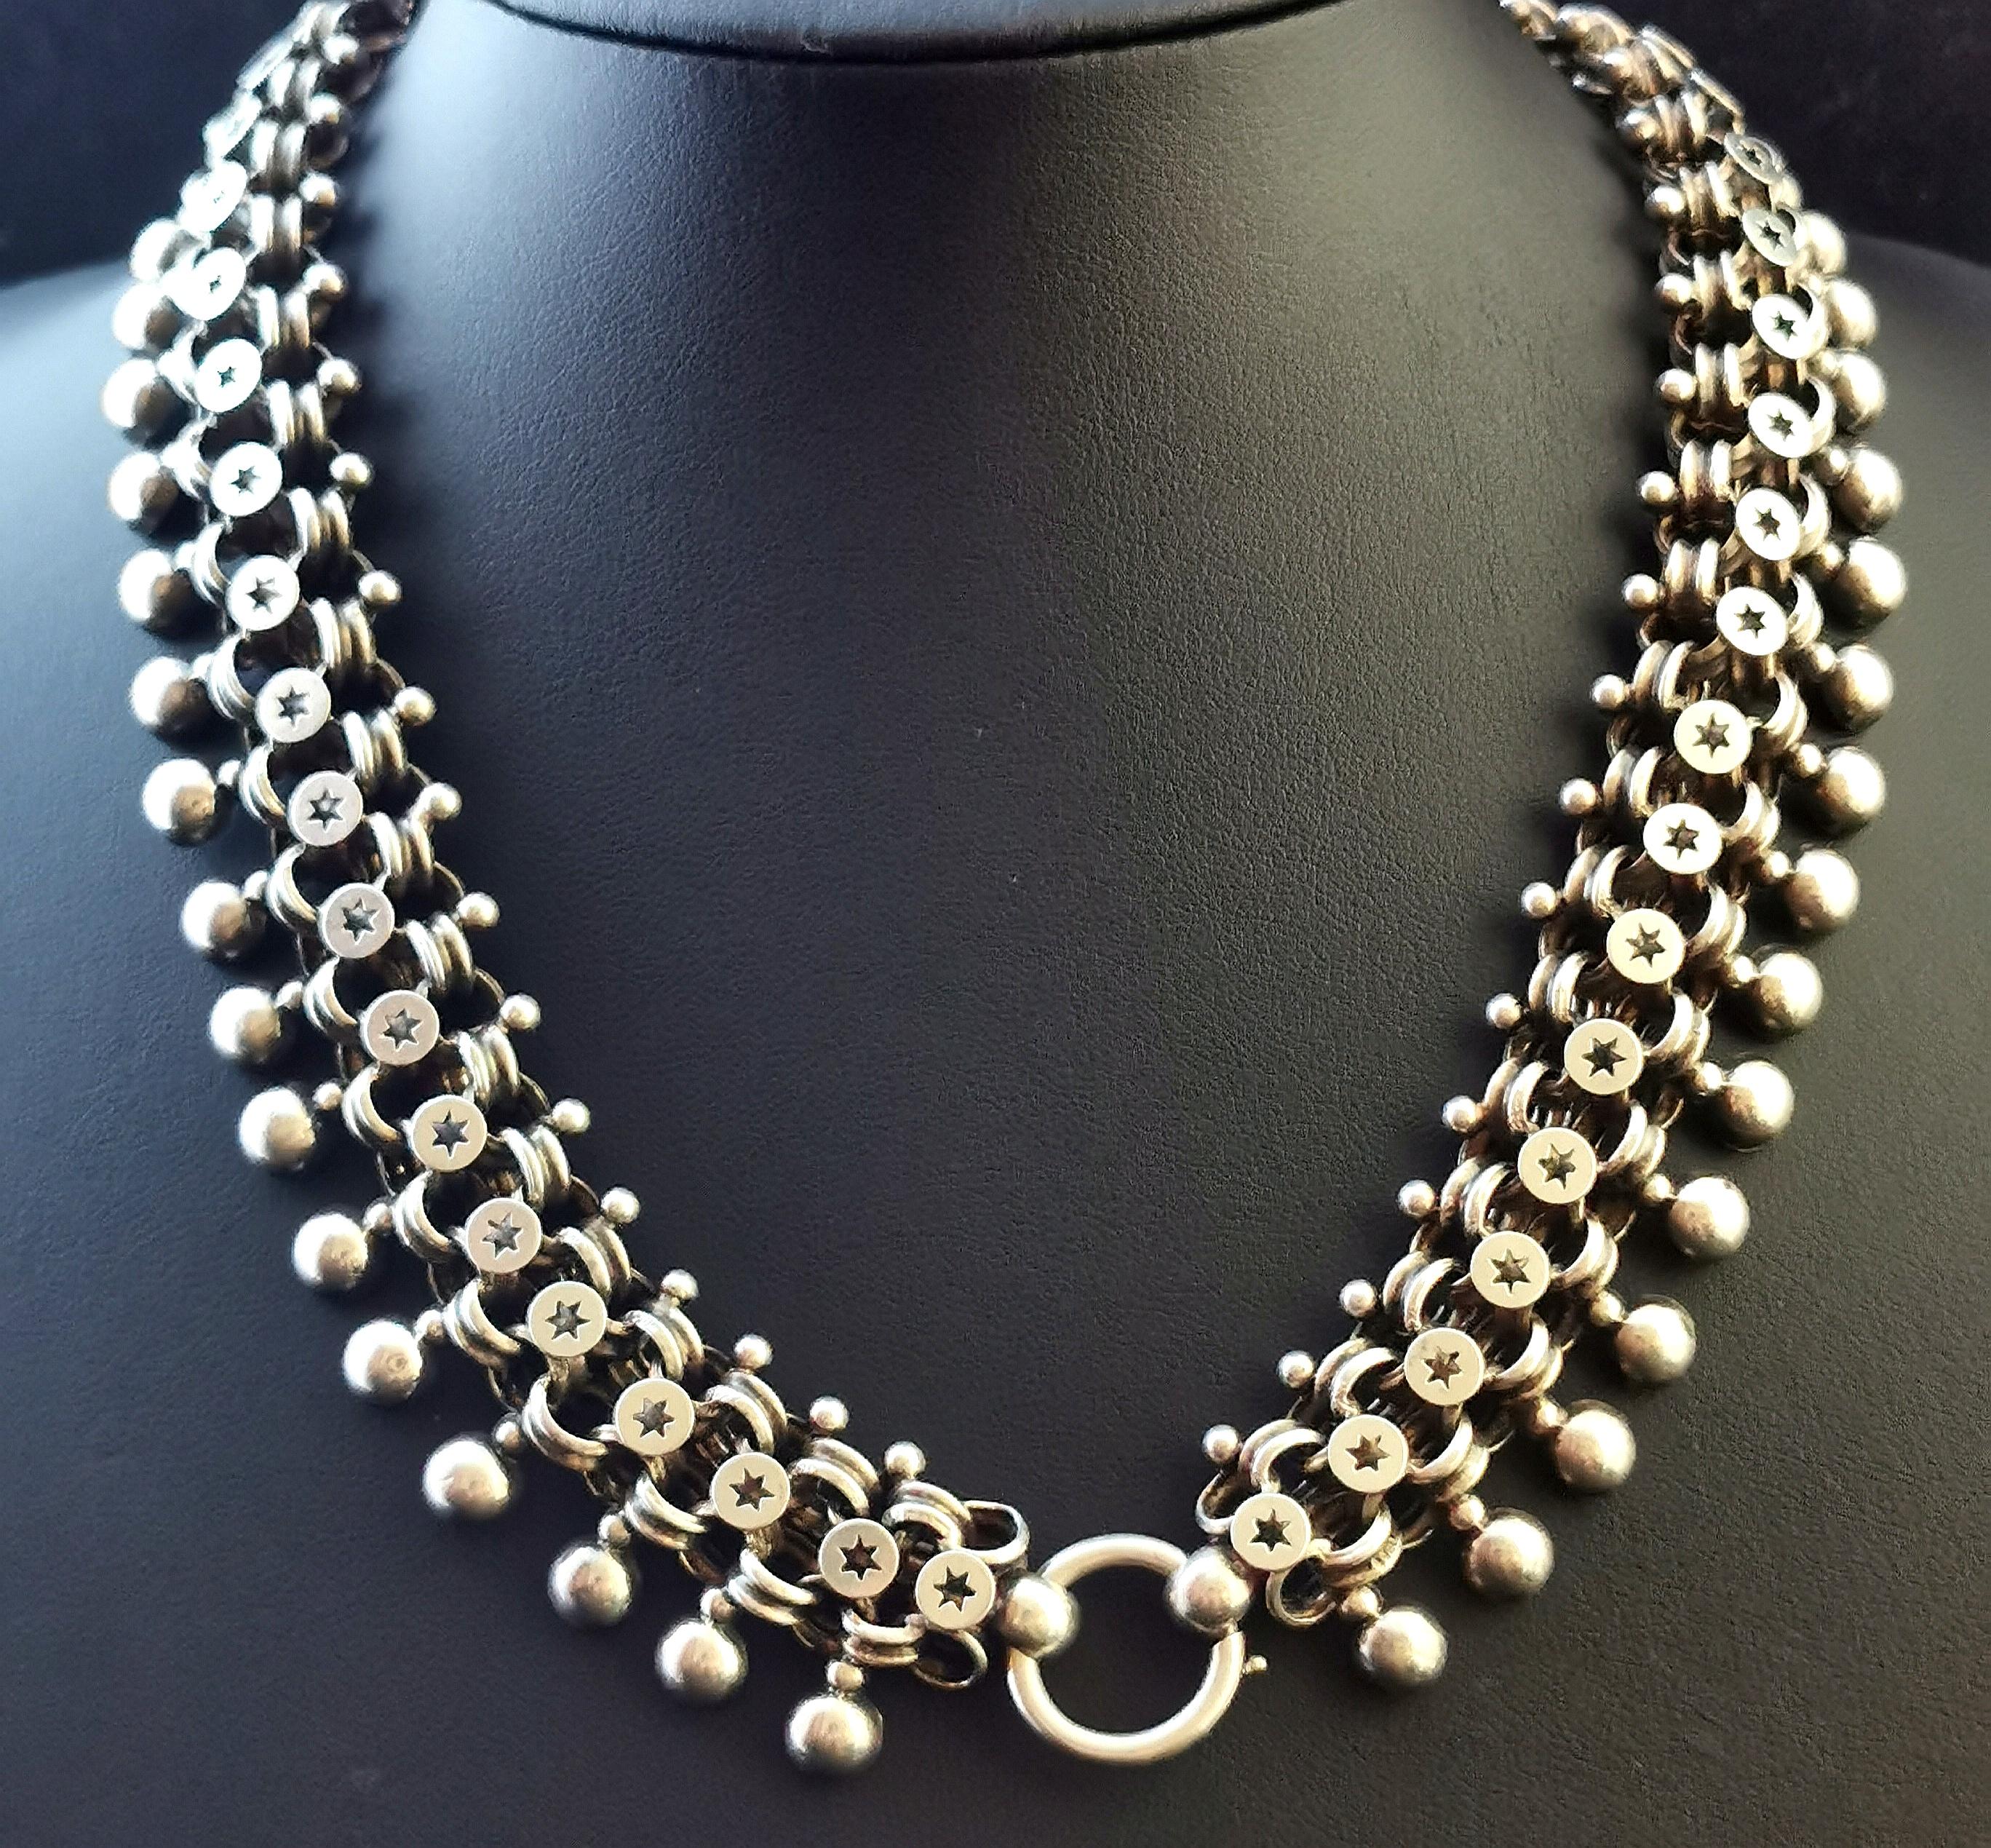 Antique Victorian Silver Collar Necklace, Pierced Links 3